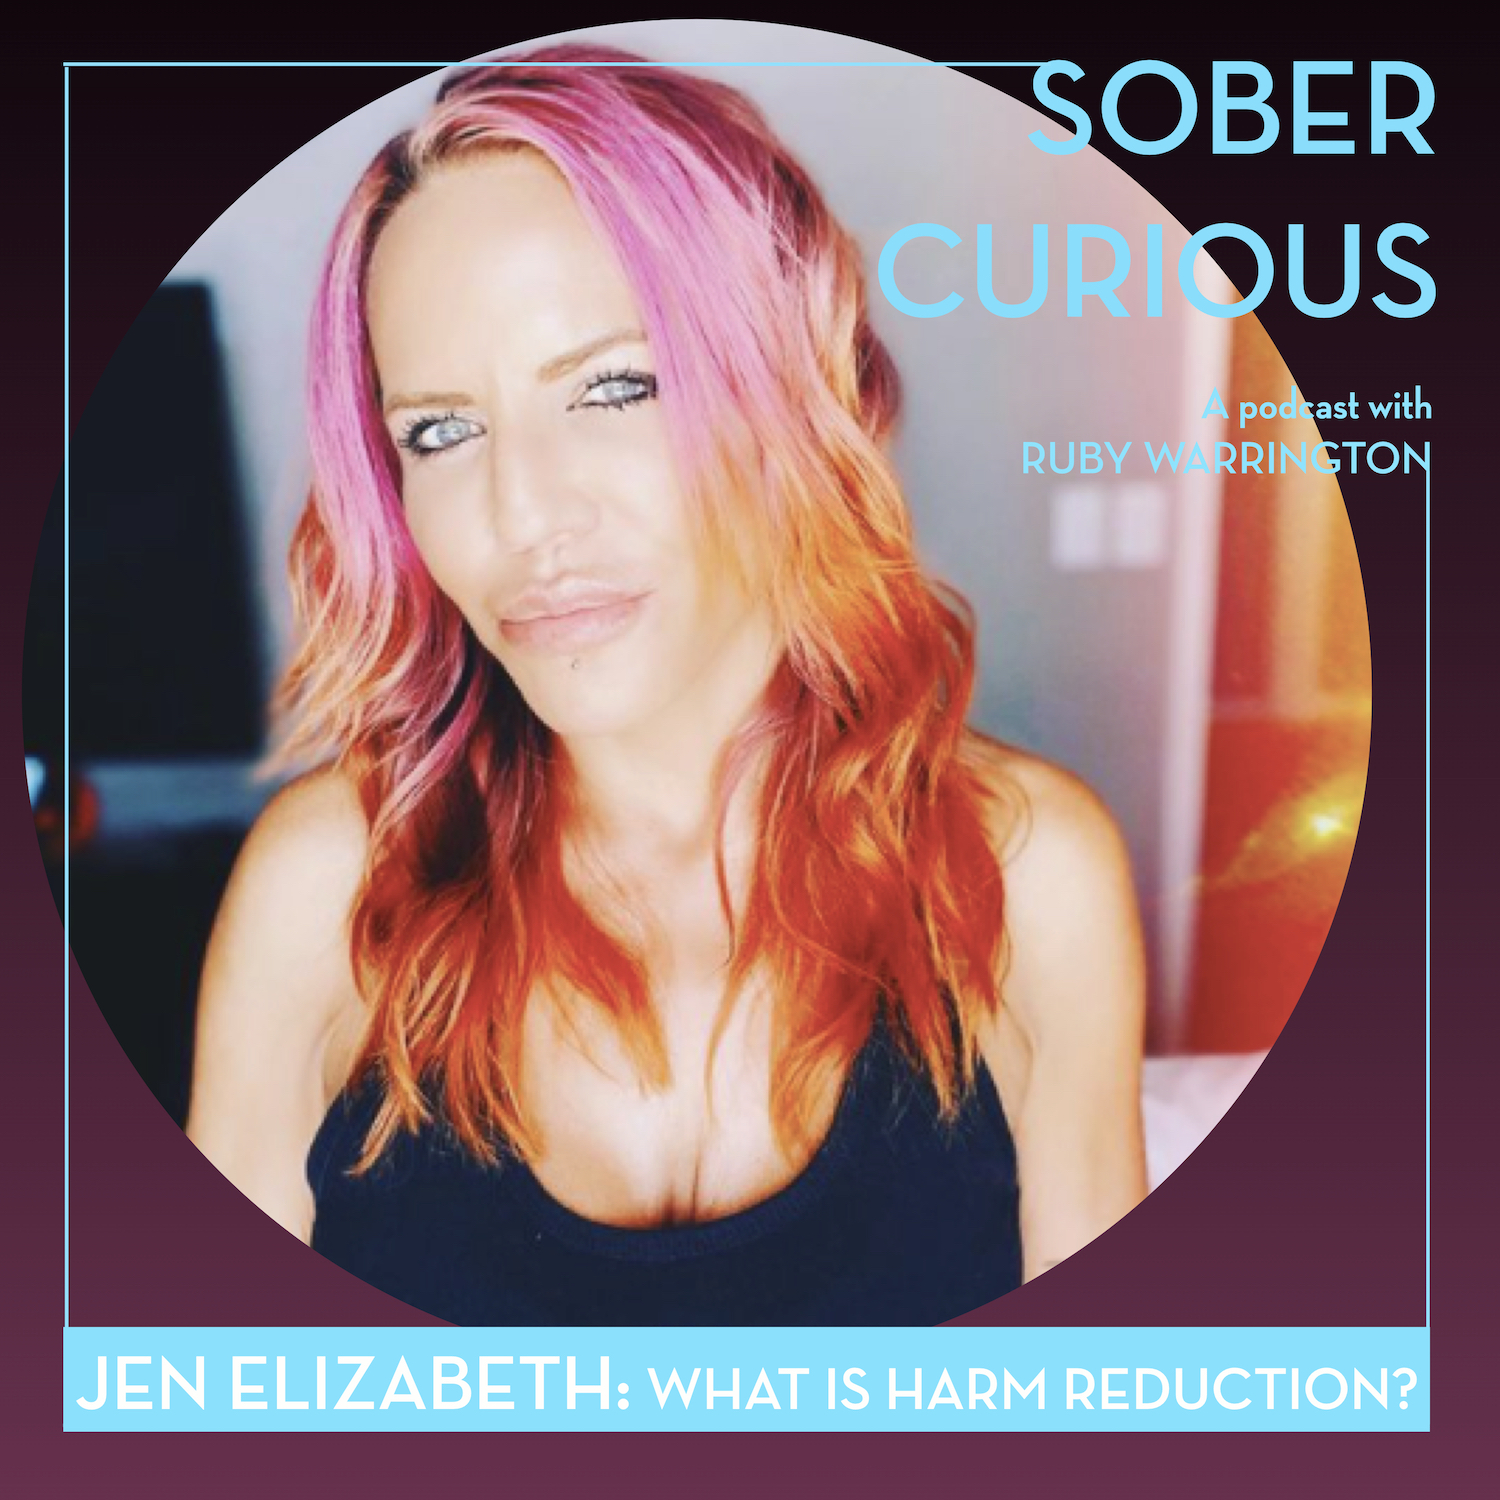 Jen Elizabeth Sober Curious podcast harm reduction Ruby Warrington